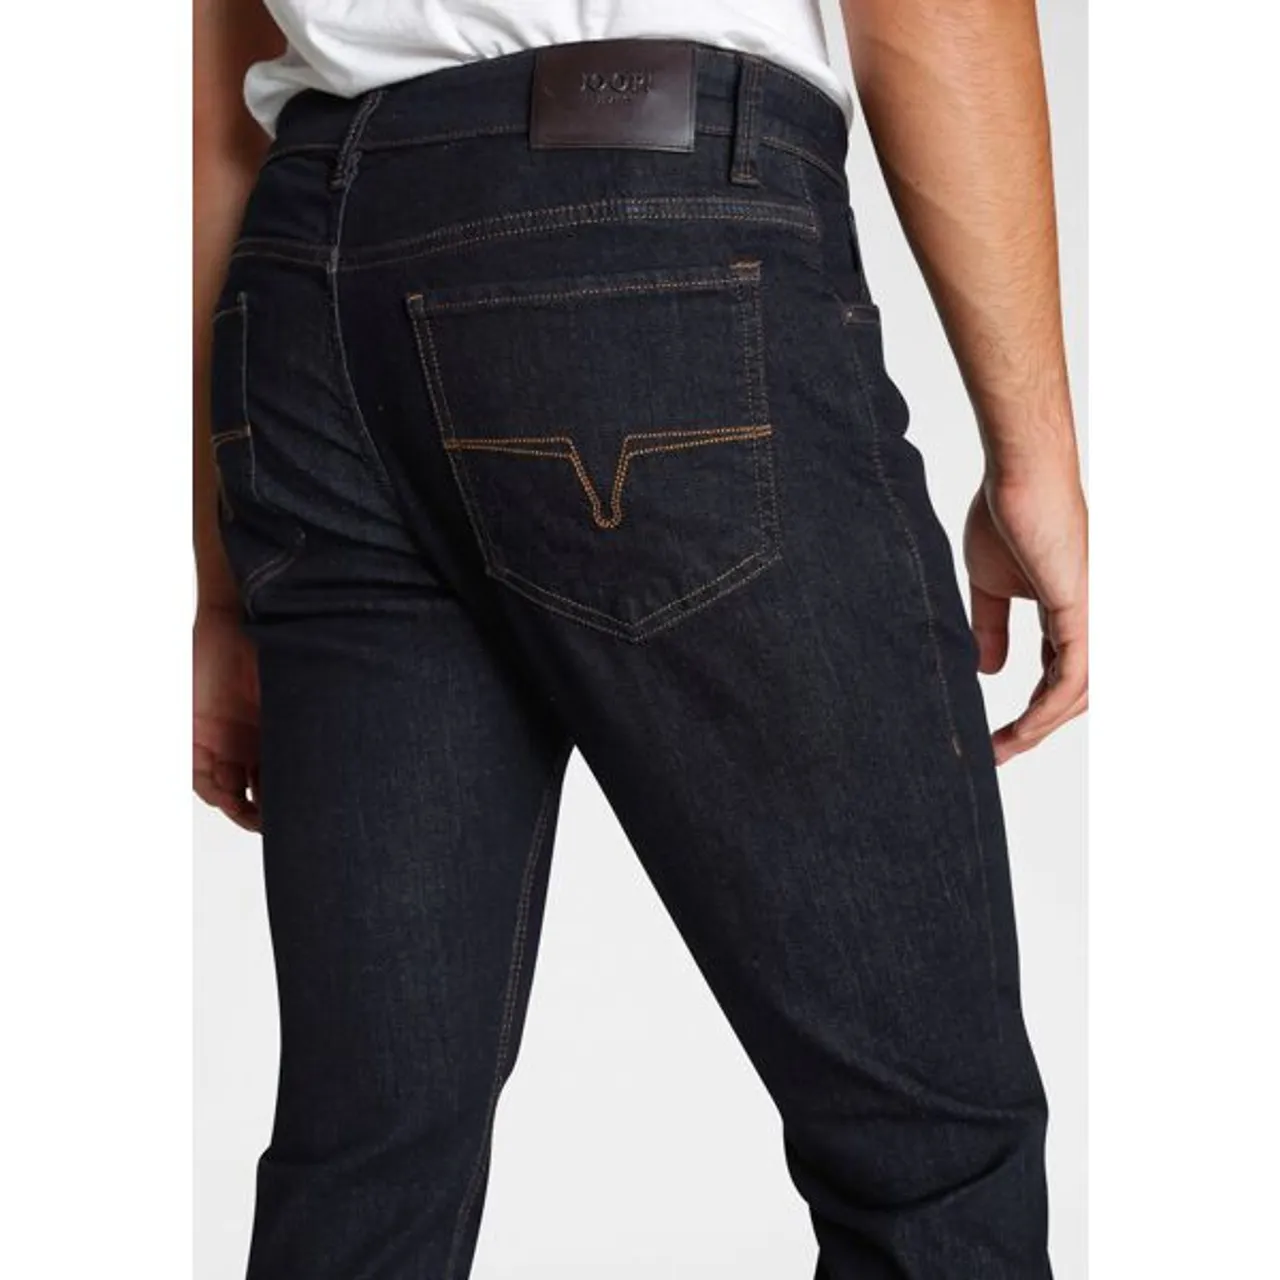 5-Pocket-Jeans JOOP JEANS "Stephen" Gr. 38, Länge 32, blau (dark blue) Herren Jeans 5-Pocket-Jeans